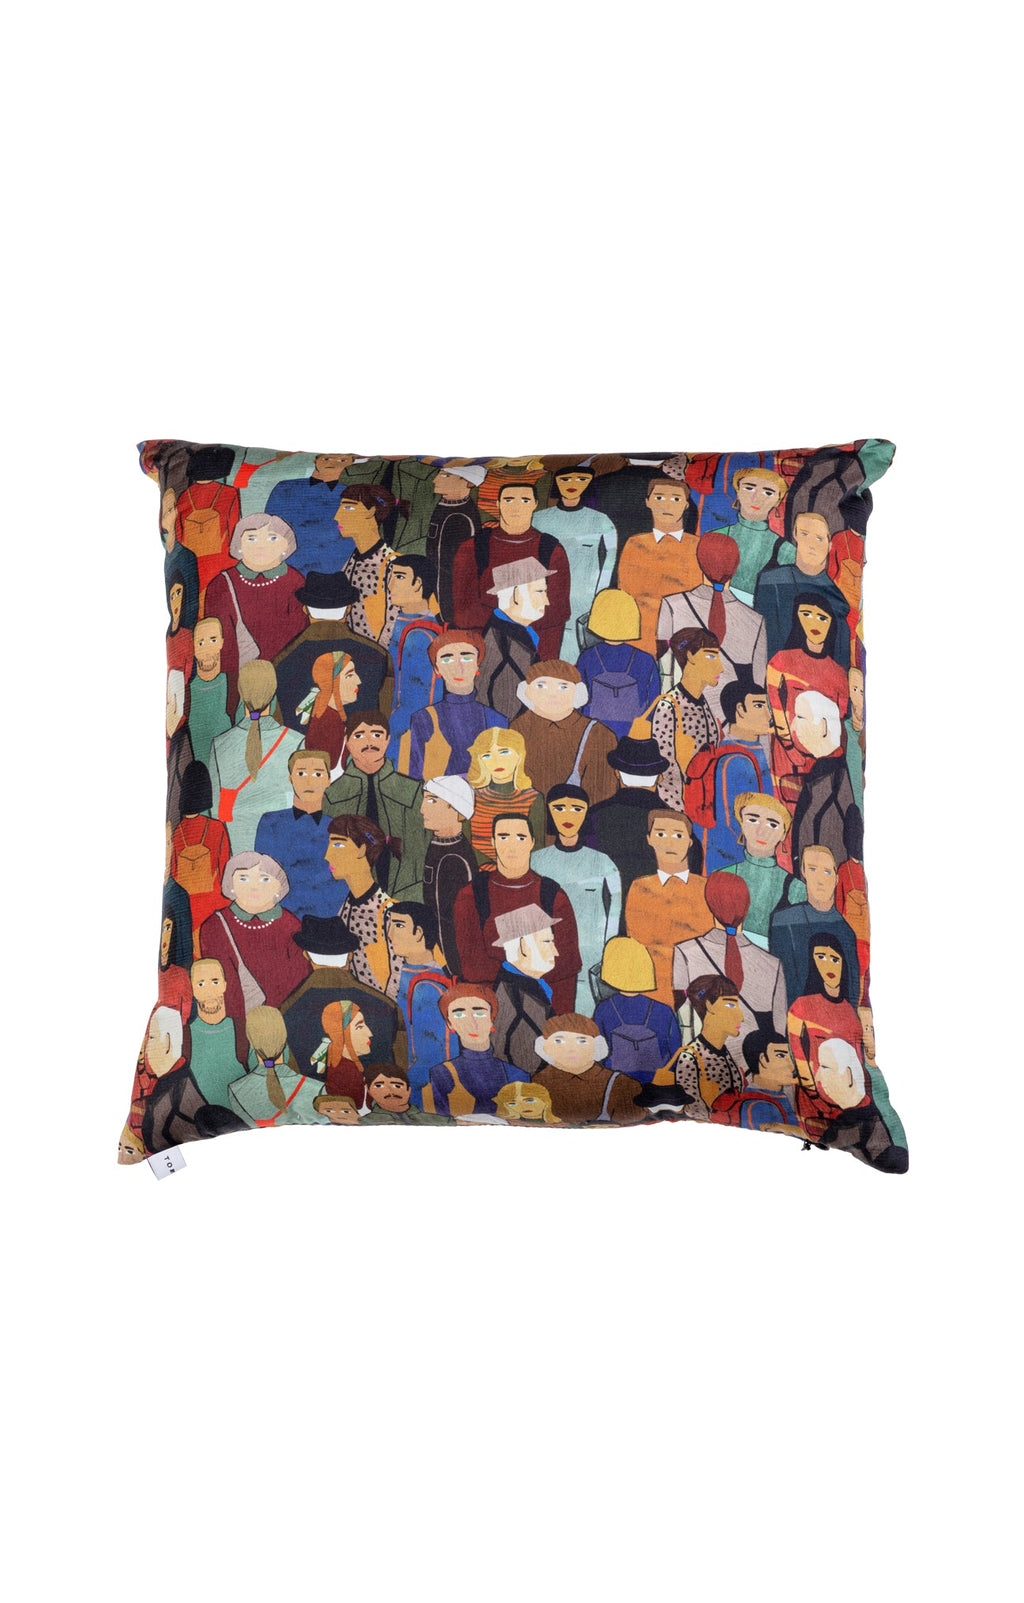 FREE GIFT Decorative cushion 'face' print